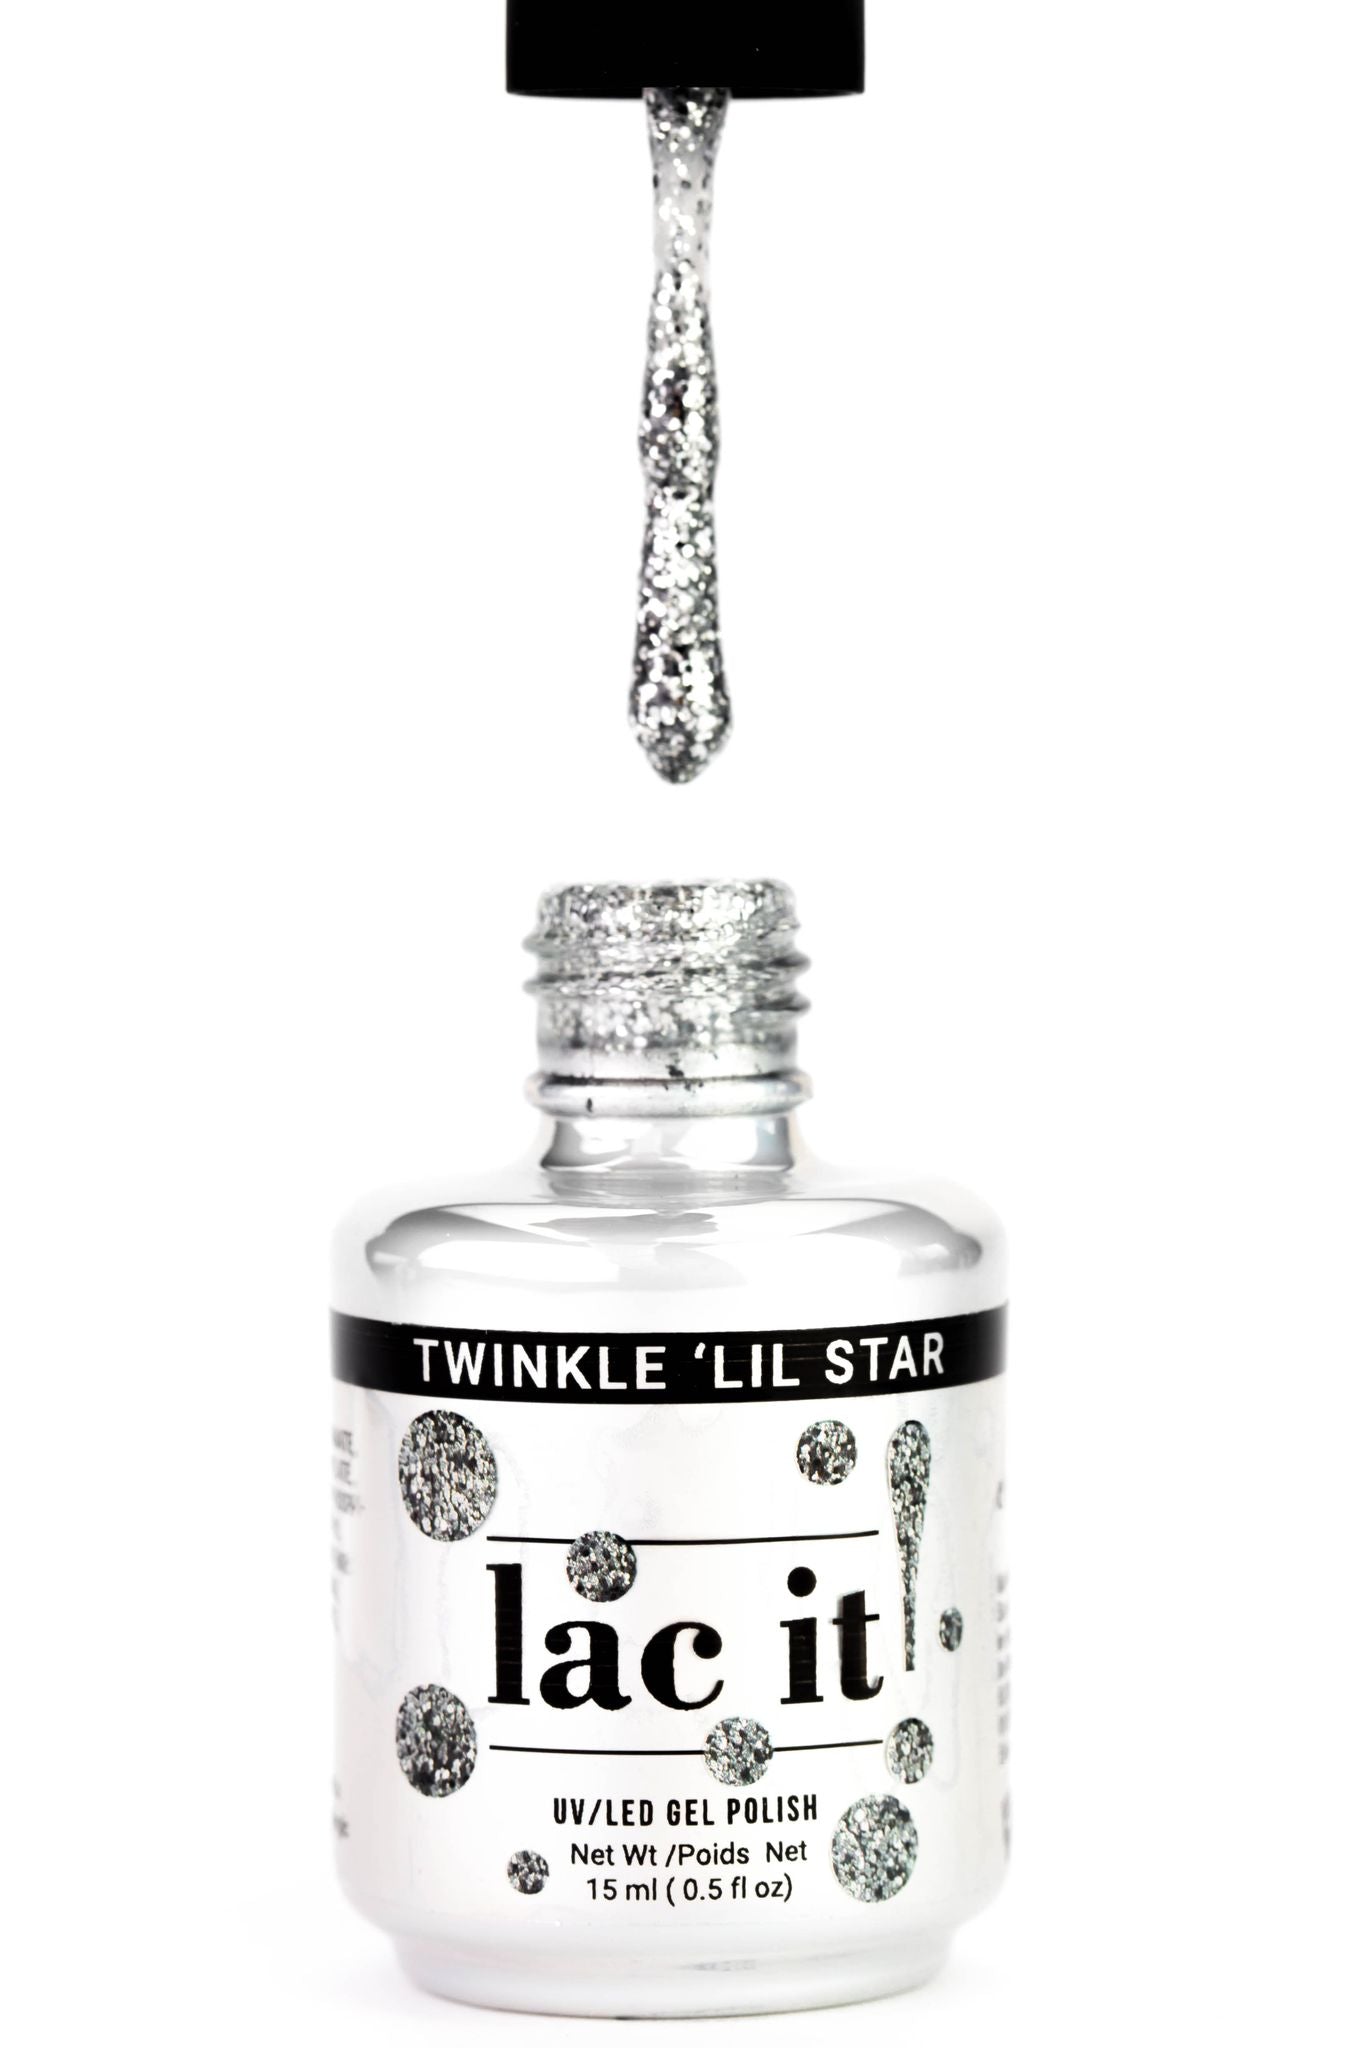 Twinkle 'Lil Star - lac it! Gel Polish